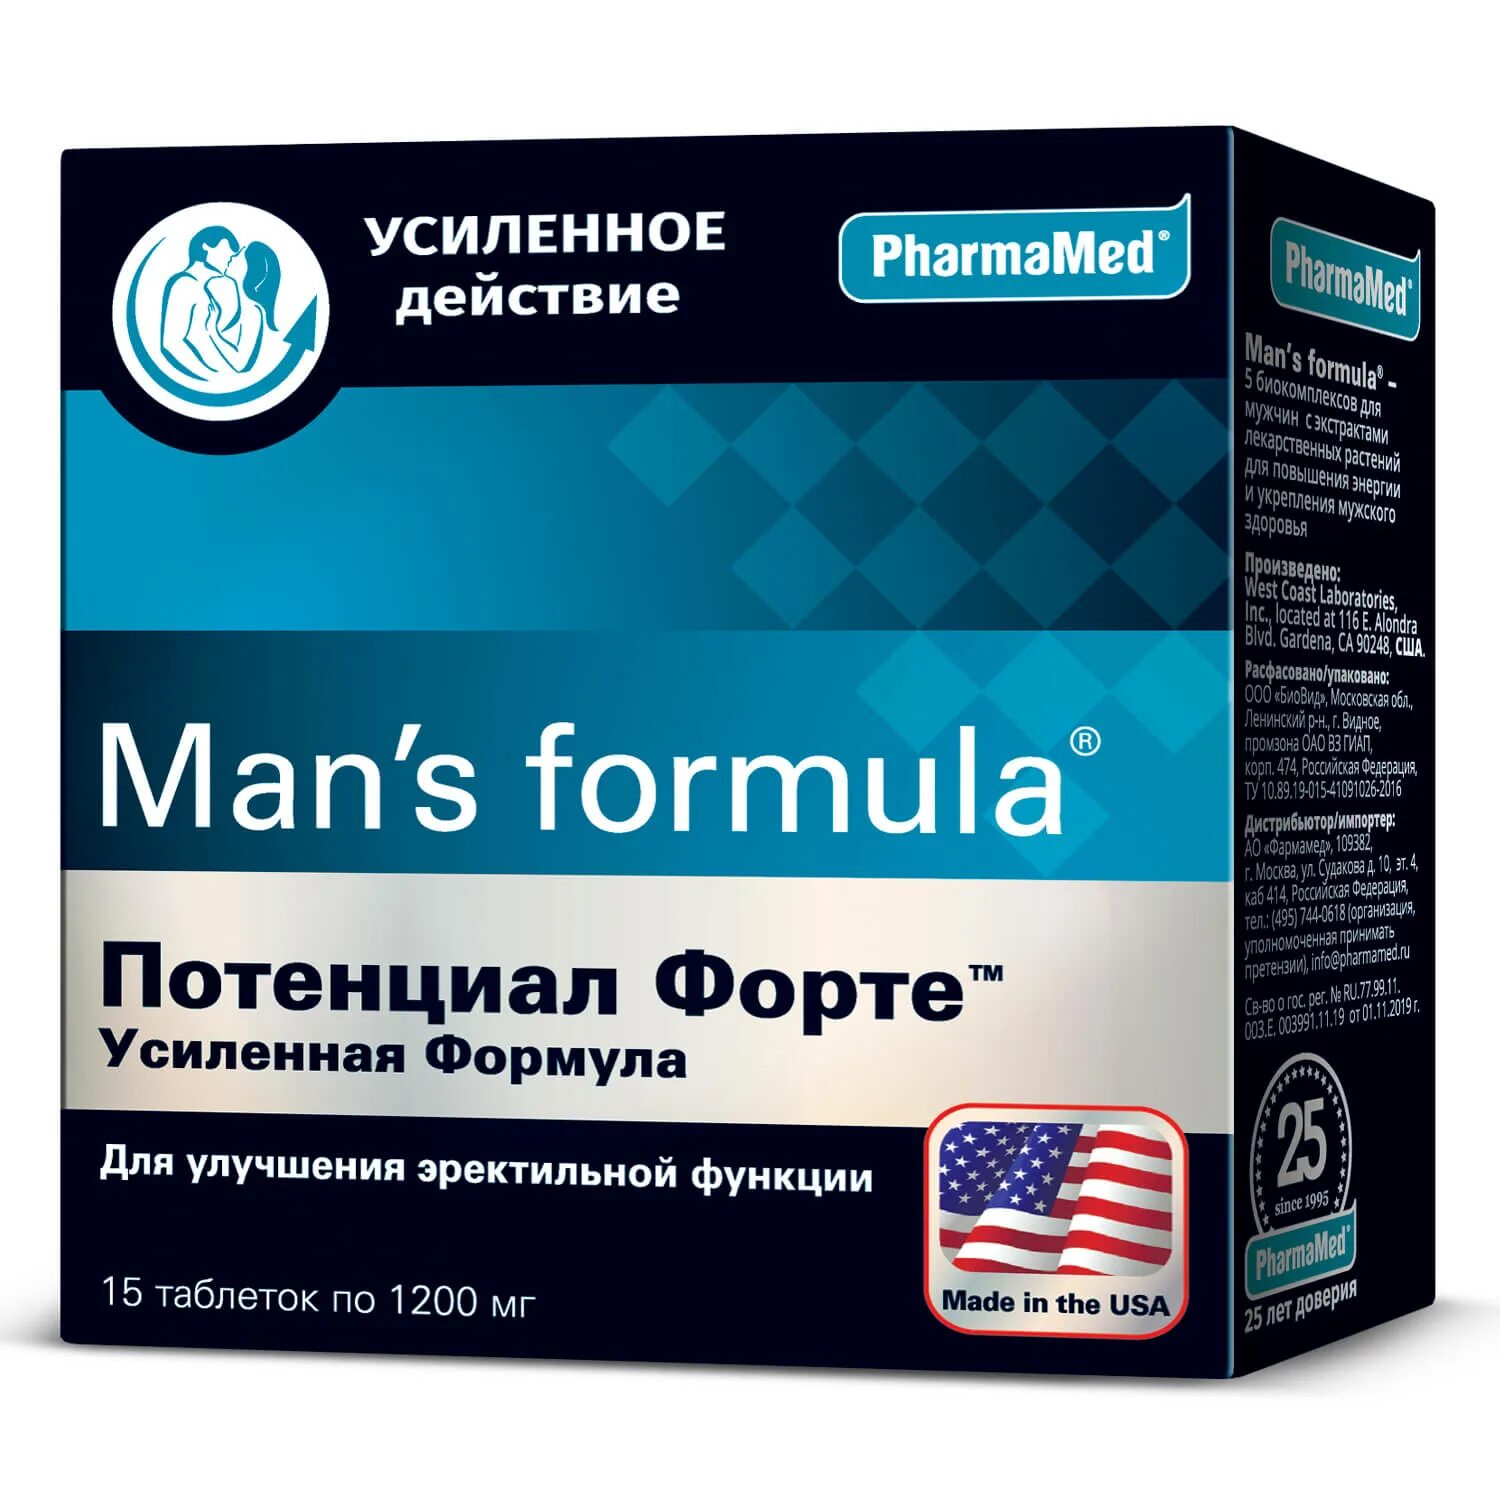 Man's Formula простата форте капс капсулы. Витамины для мужчин mans Formula потенциал форте. Менс формула потенциал форте усиленная ф-ла таб. №15. Мен-с формула потенциал форте усиленная формула таб. №15.